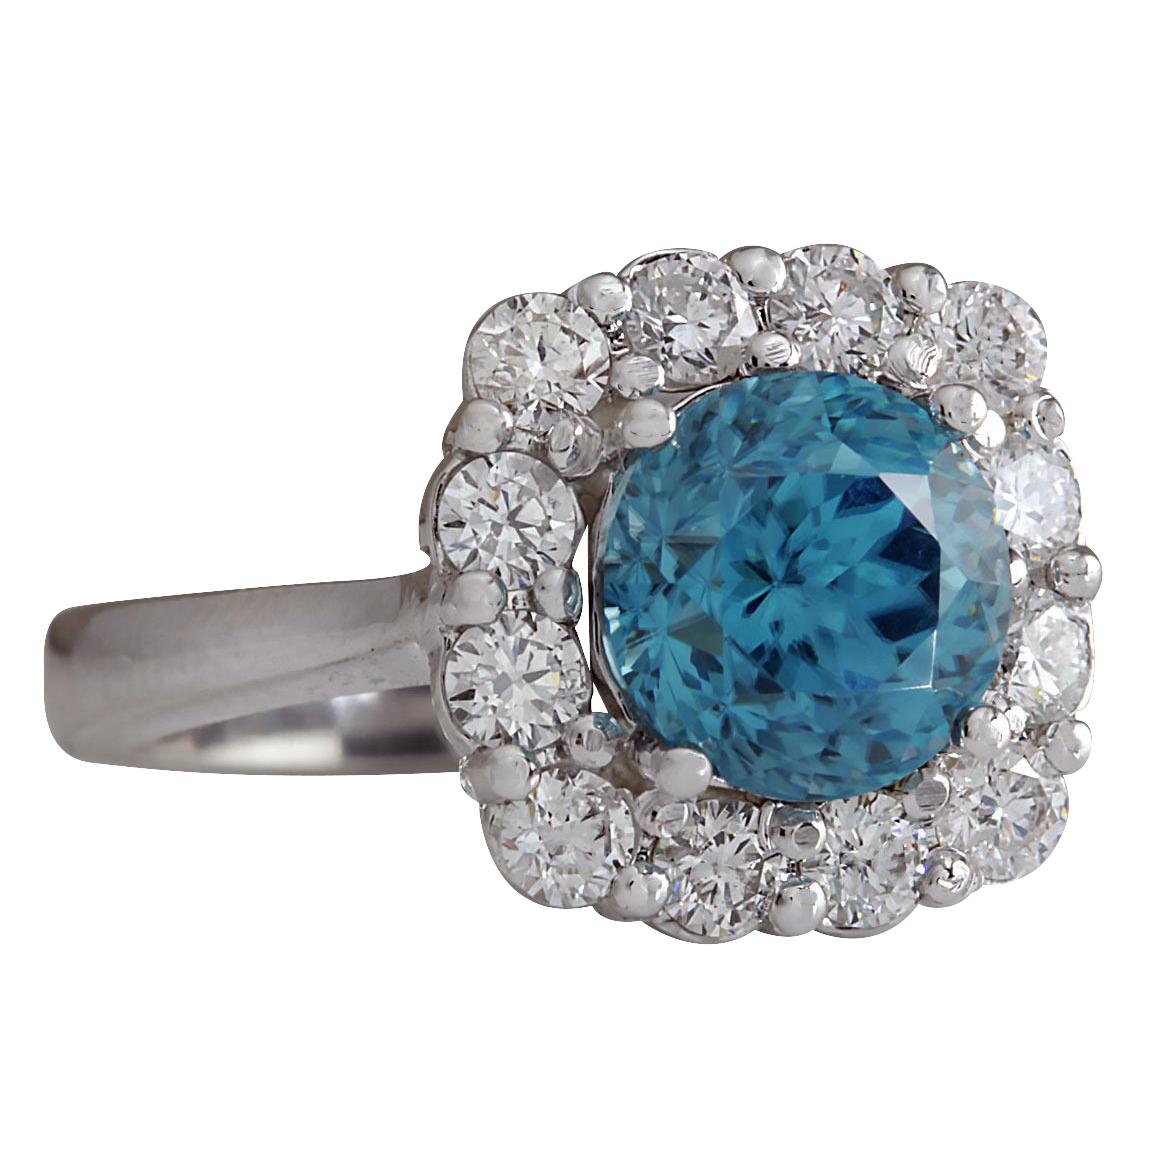 5.33 Carat Natural Zircon 14 Karat White Gold Diamond Ring
Stamped: 14K White Gold
Total Ring Weight: 6.5 Grams
Total Natural Zircon Weight is 4.43 Carat (Measures: 8.00x8.00 mm)
Color: Blue
Total Natural Diamond Weight is 0.90 Carat
Color: F-G,